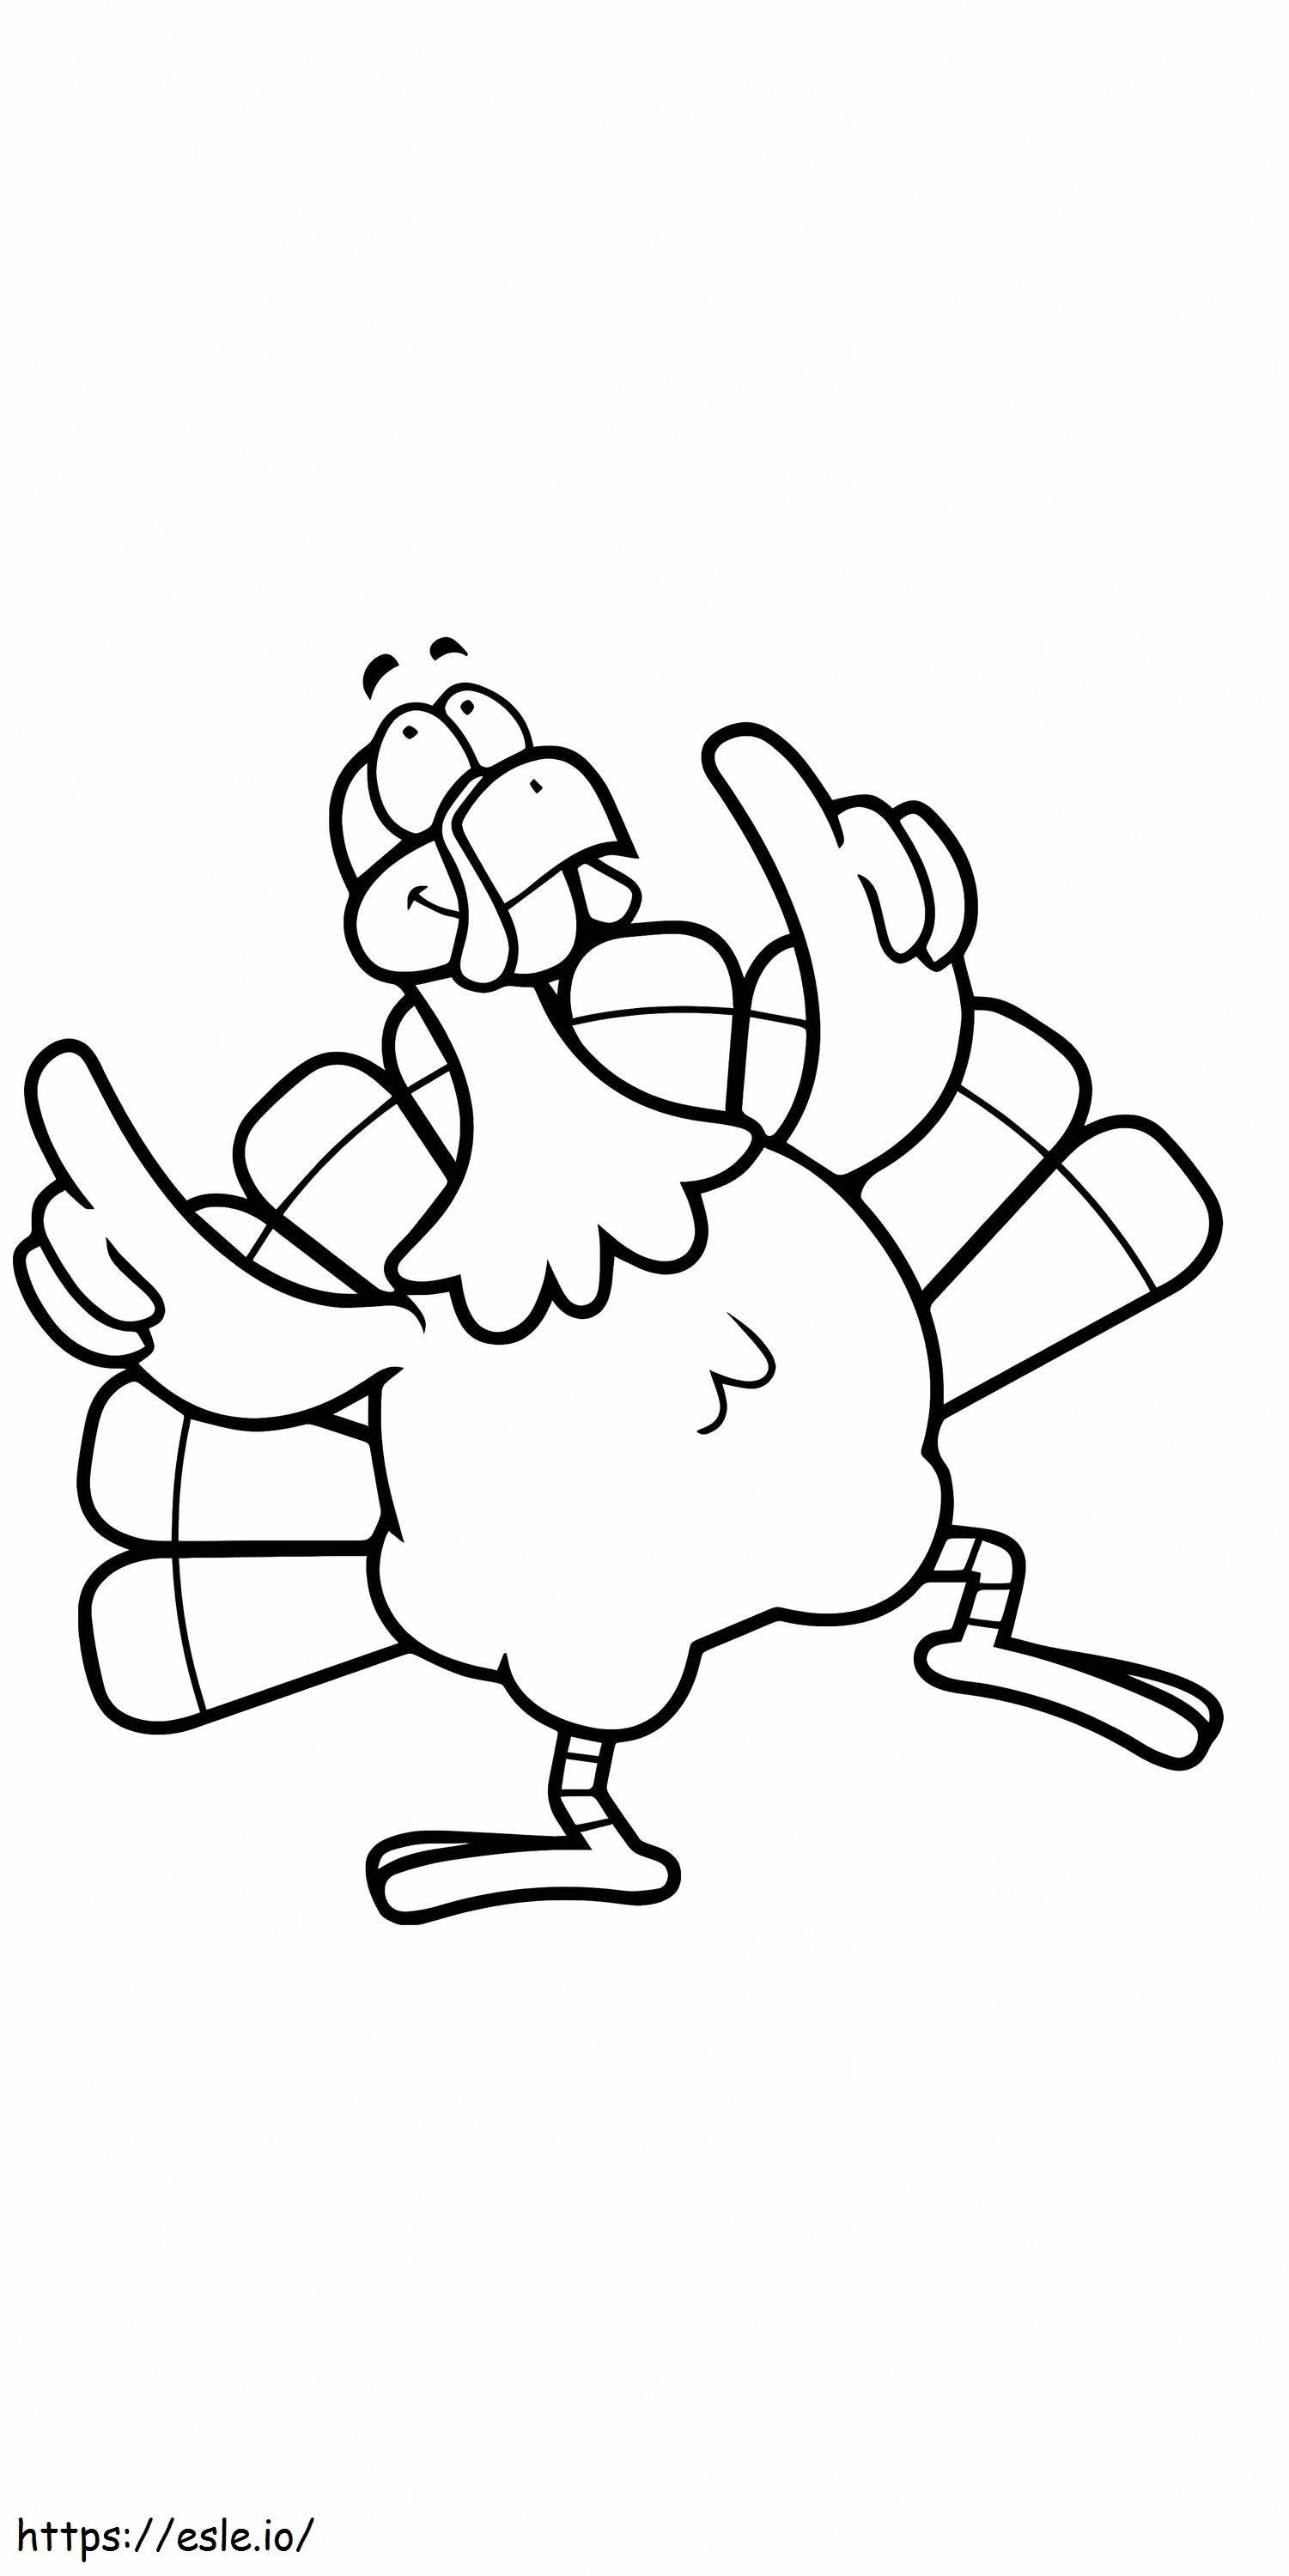 Dancing Turkey coloring page